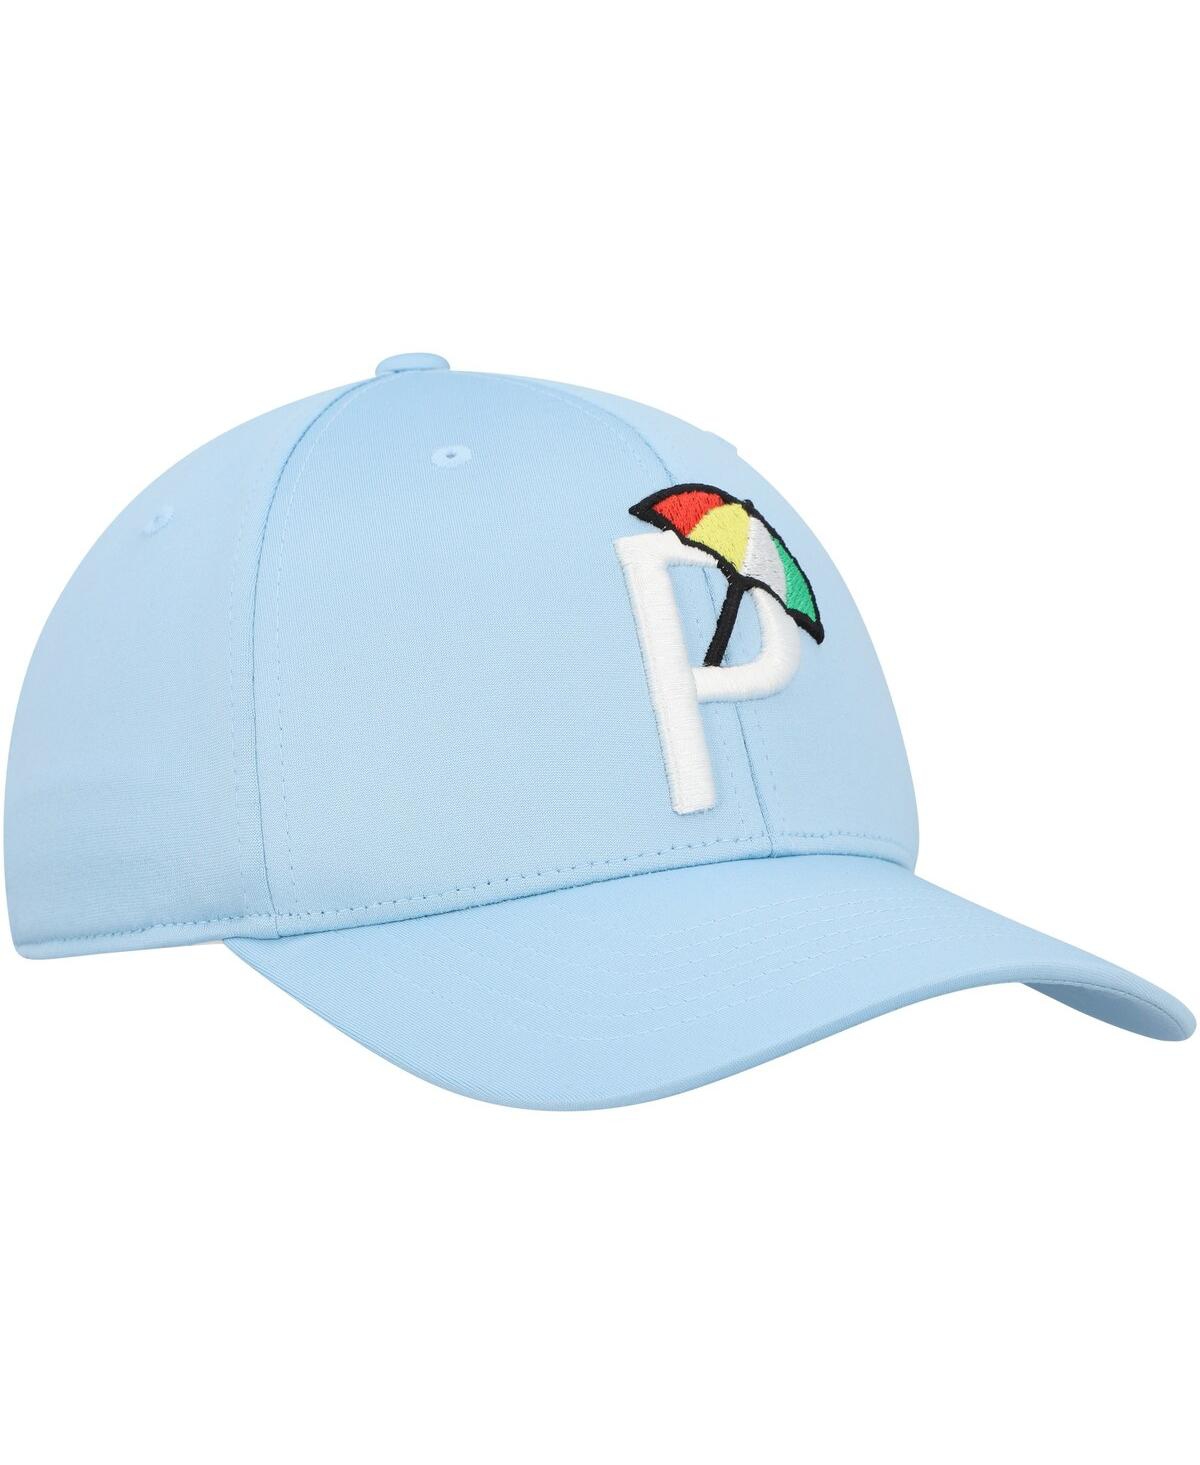 Shop Puma Men's Light Blue Arnold Palmer Snapback Hat